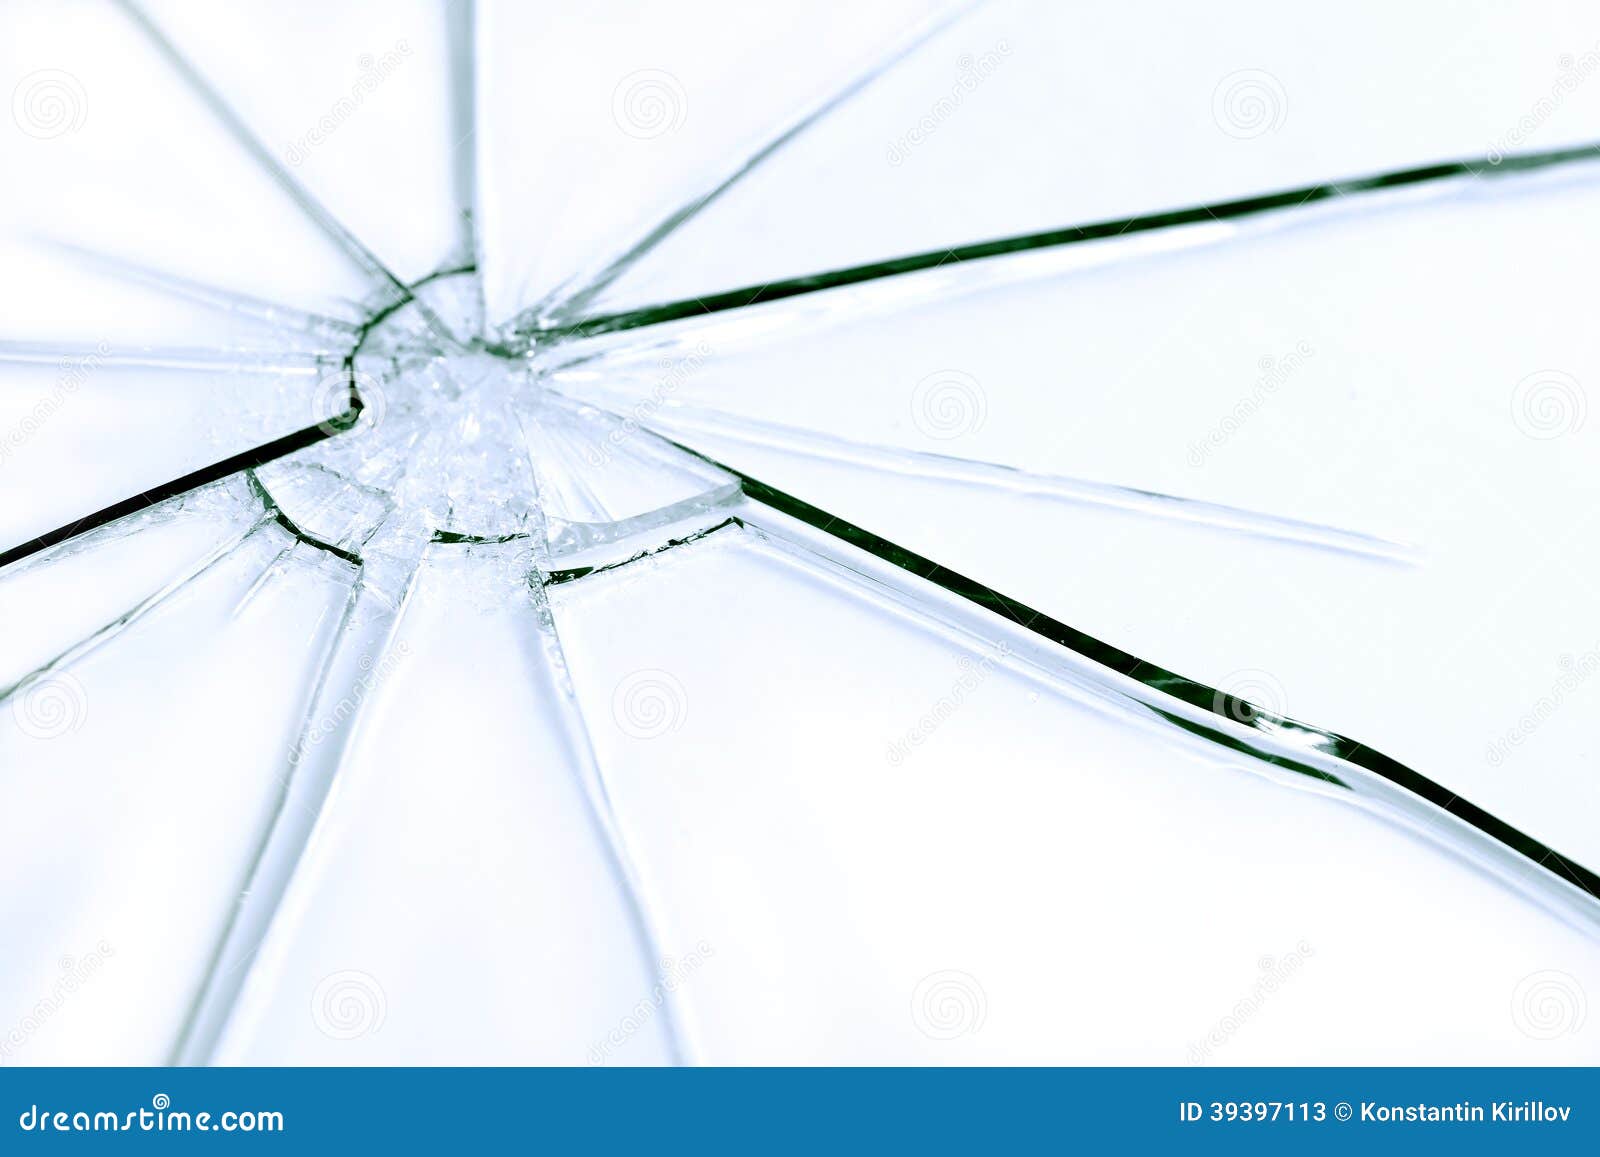 Shattered Glass stock image. Image of hammering, violence - 39397113